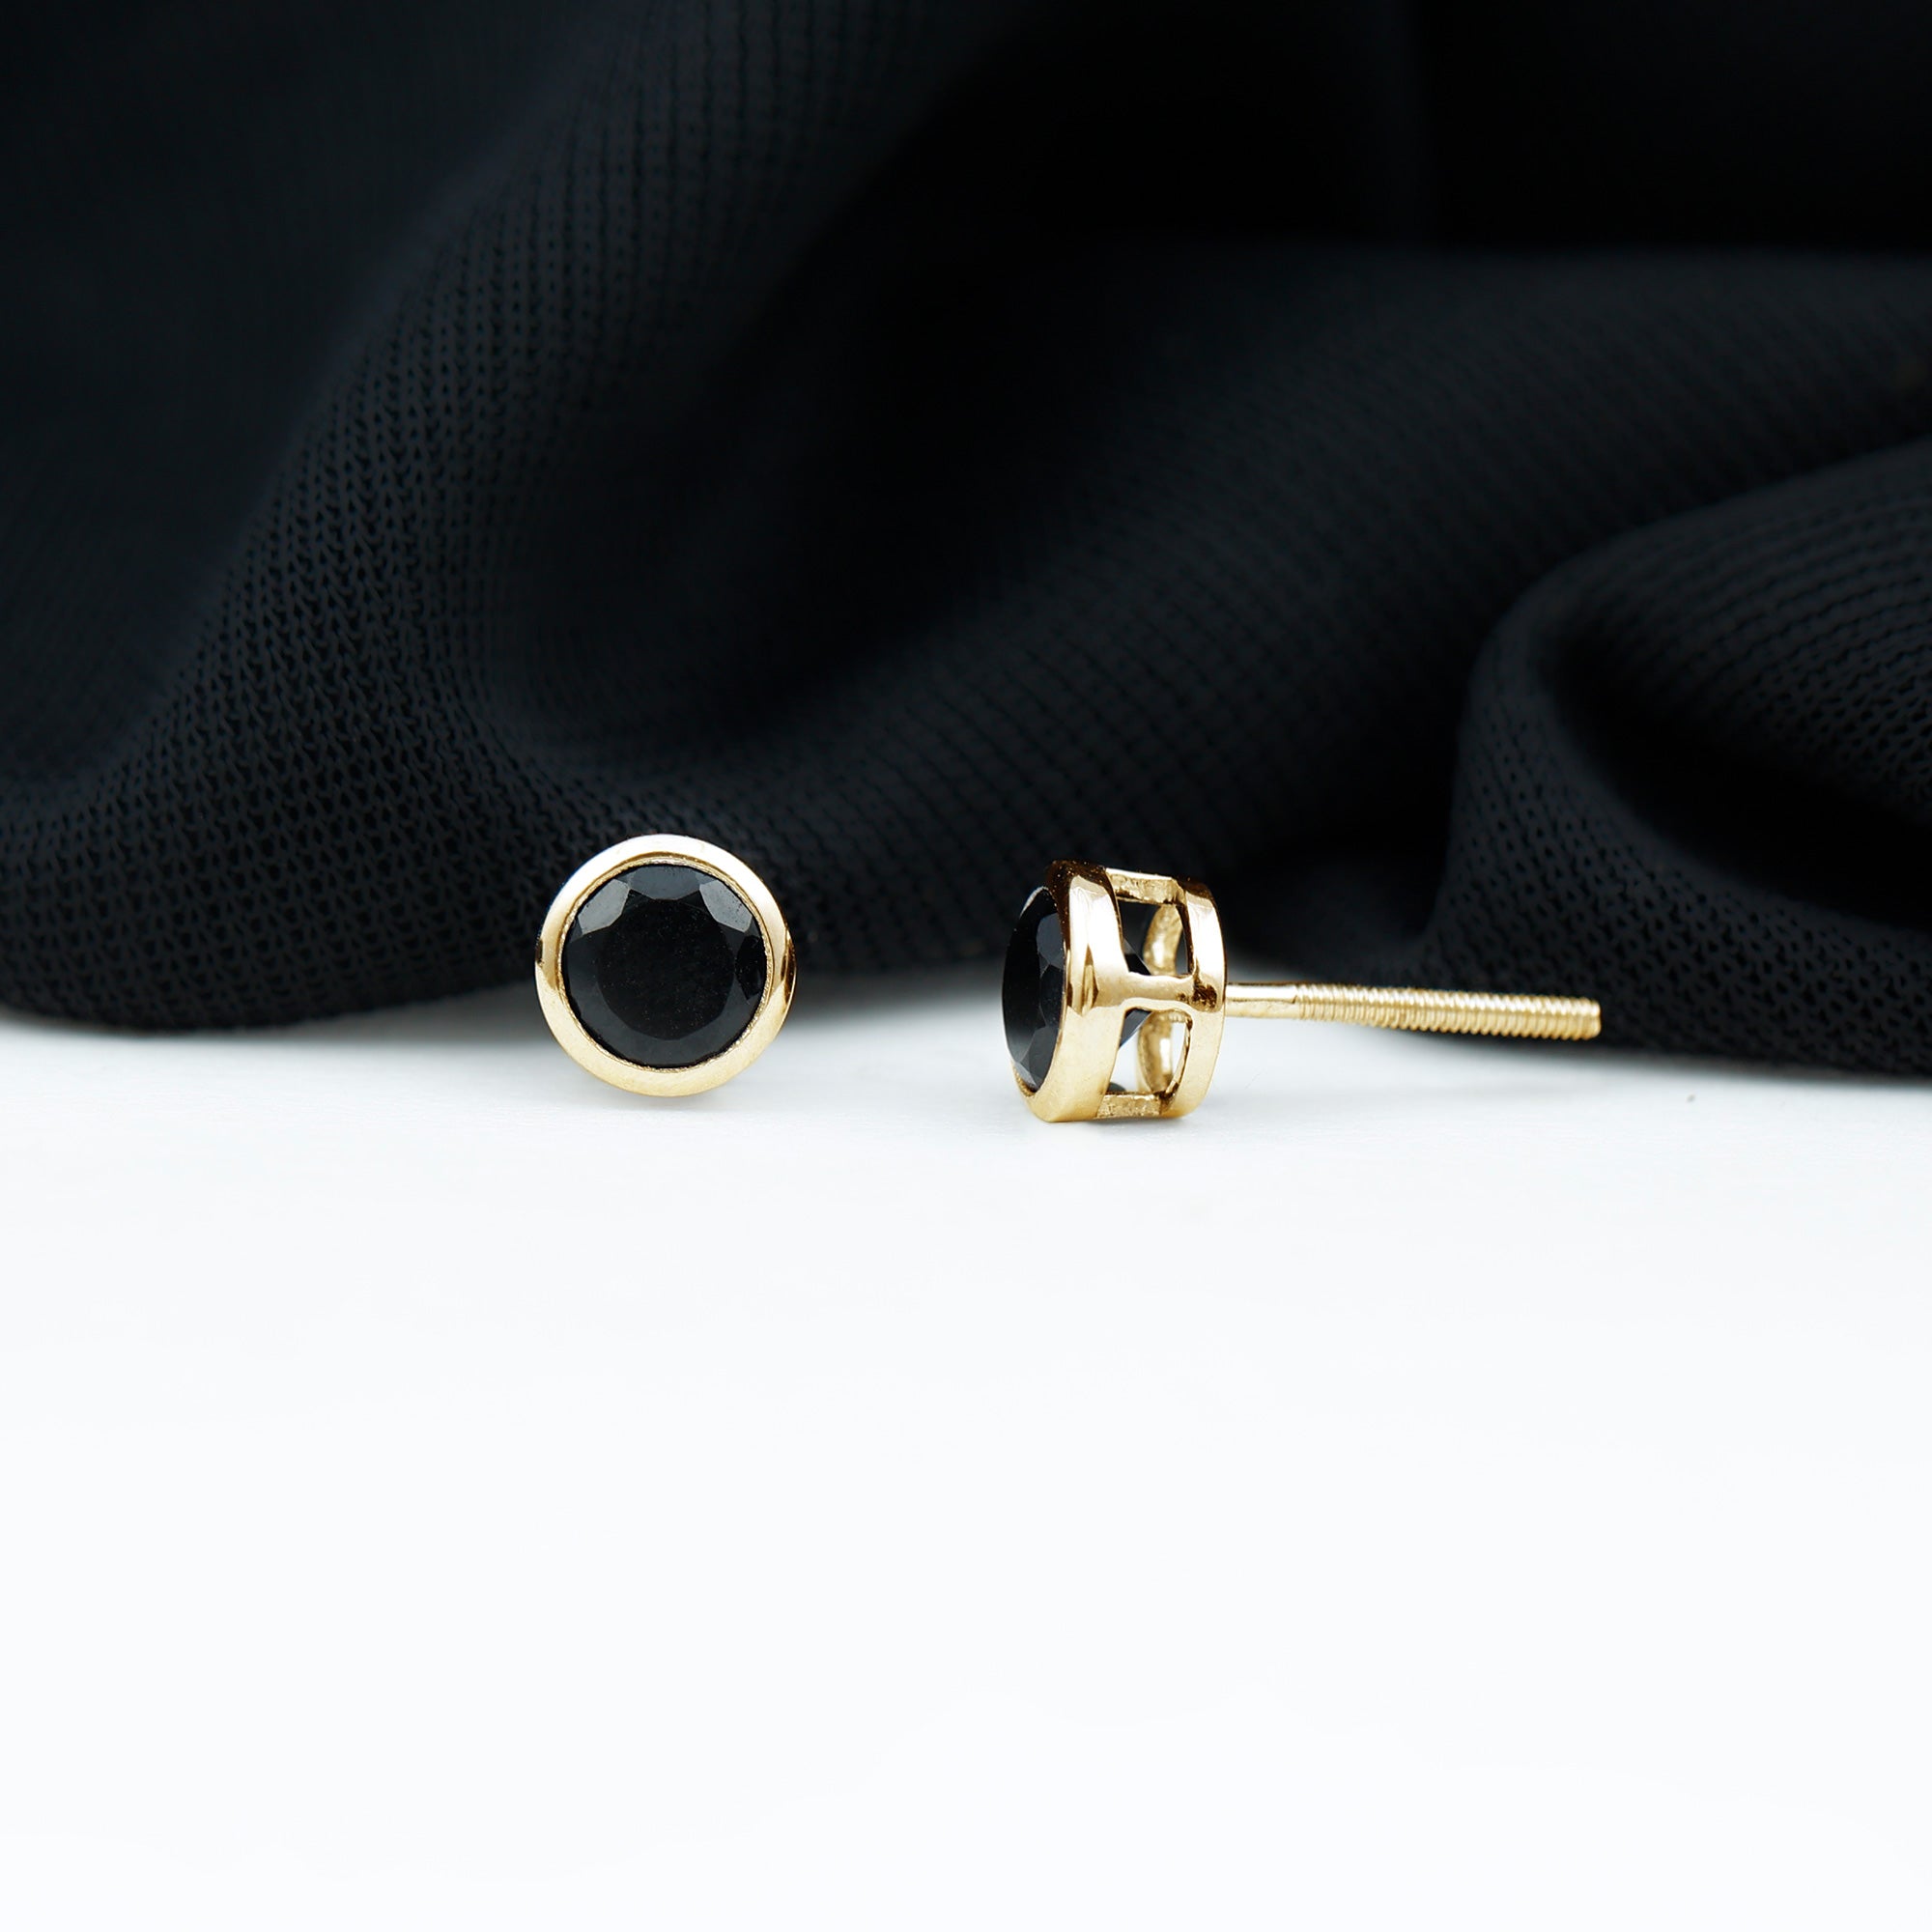 Black Onyx Solitaire Stud Earrings in Bezel Setting Black Onyx - ( AAA ) - Quality - Rosec Jewels